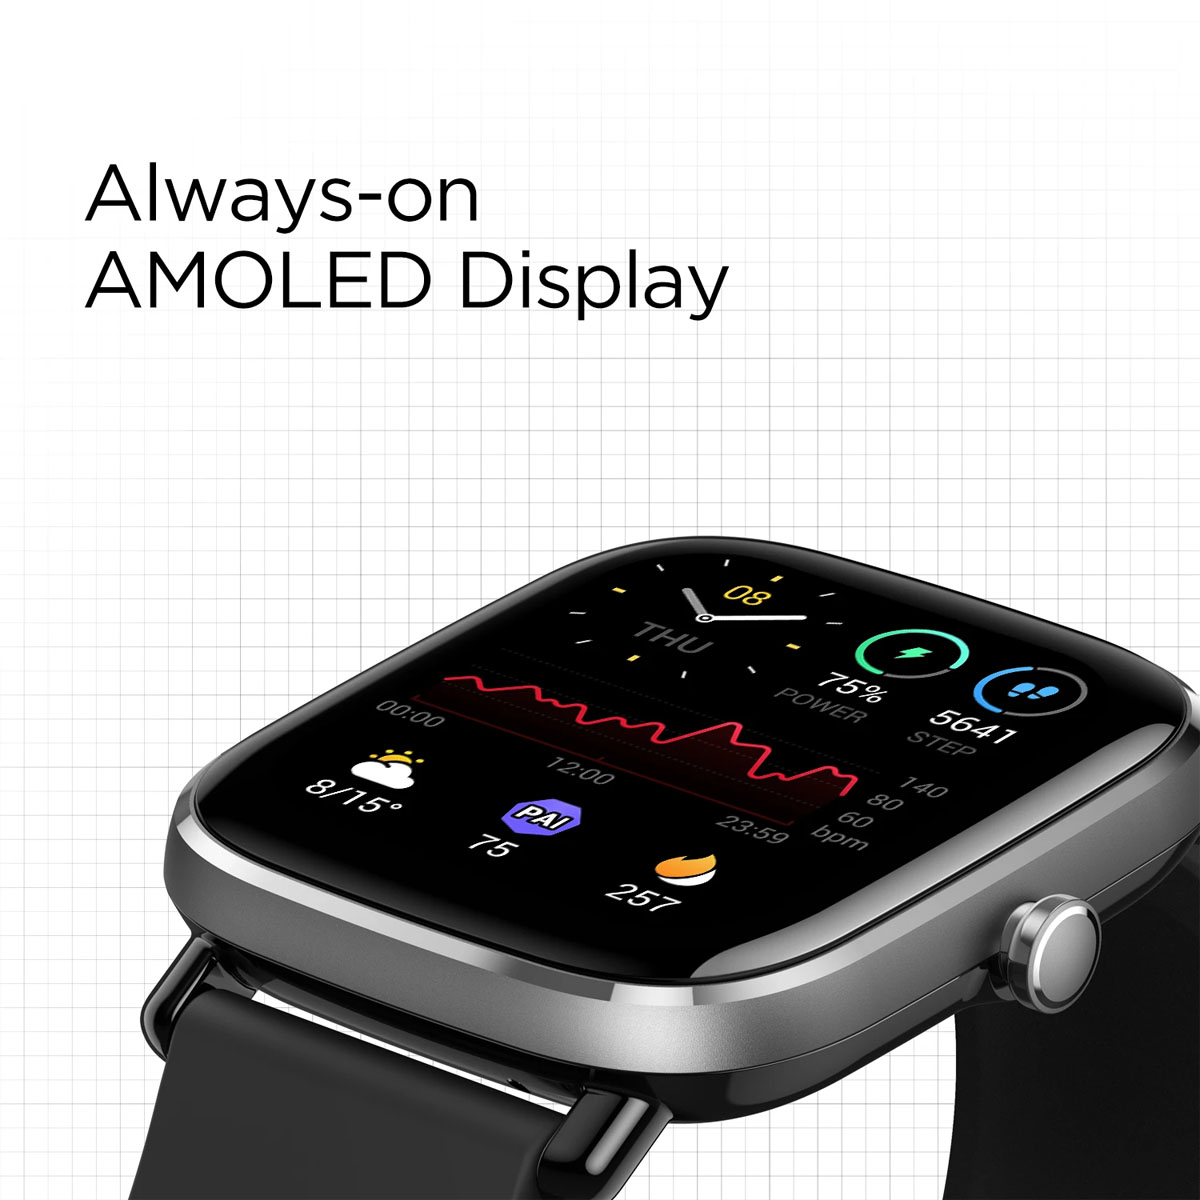 Smartwatch Reloj Xiaomi Amazfit GTS 2 Mini Negro1.55'' Fashion Aleación De Aluminio Bluetooth Alexa 